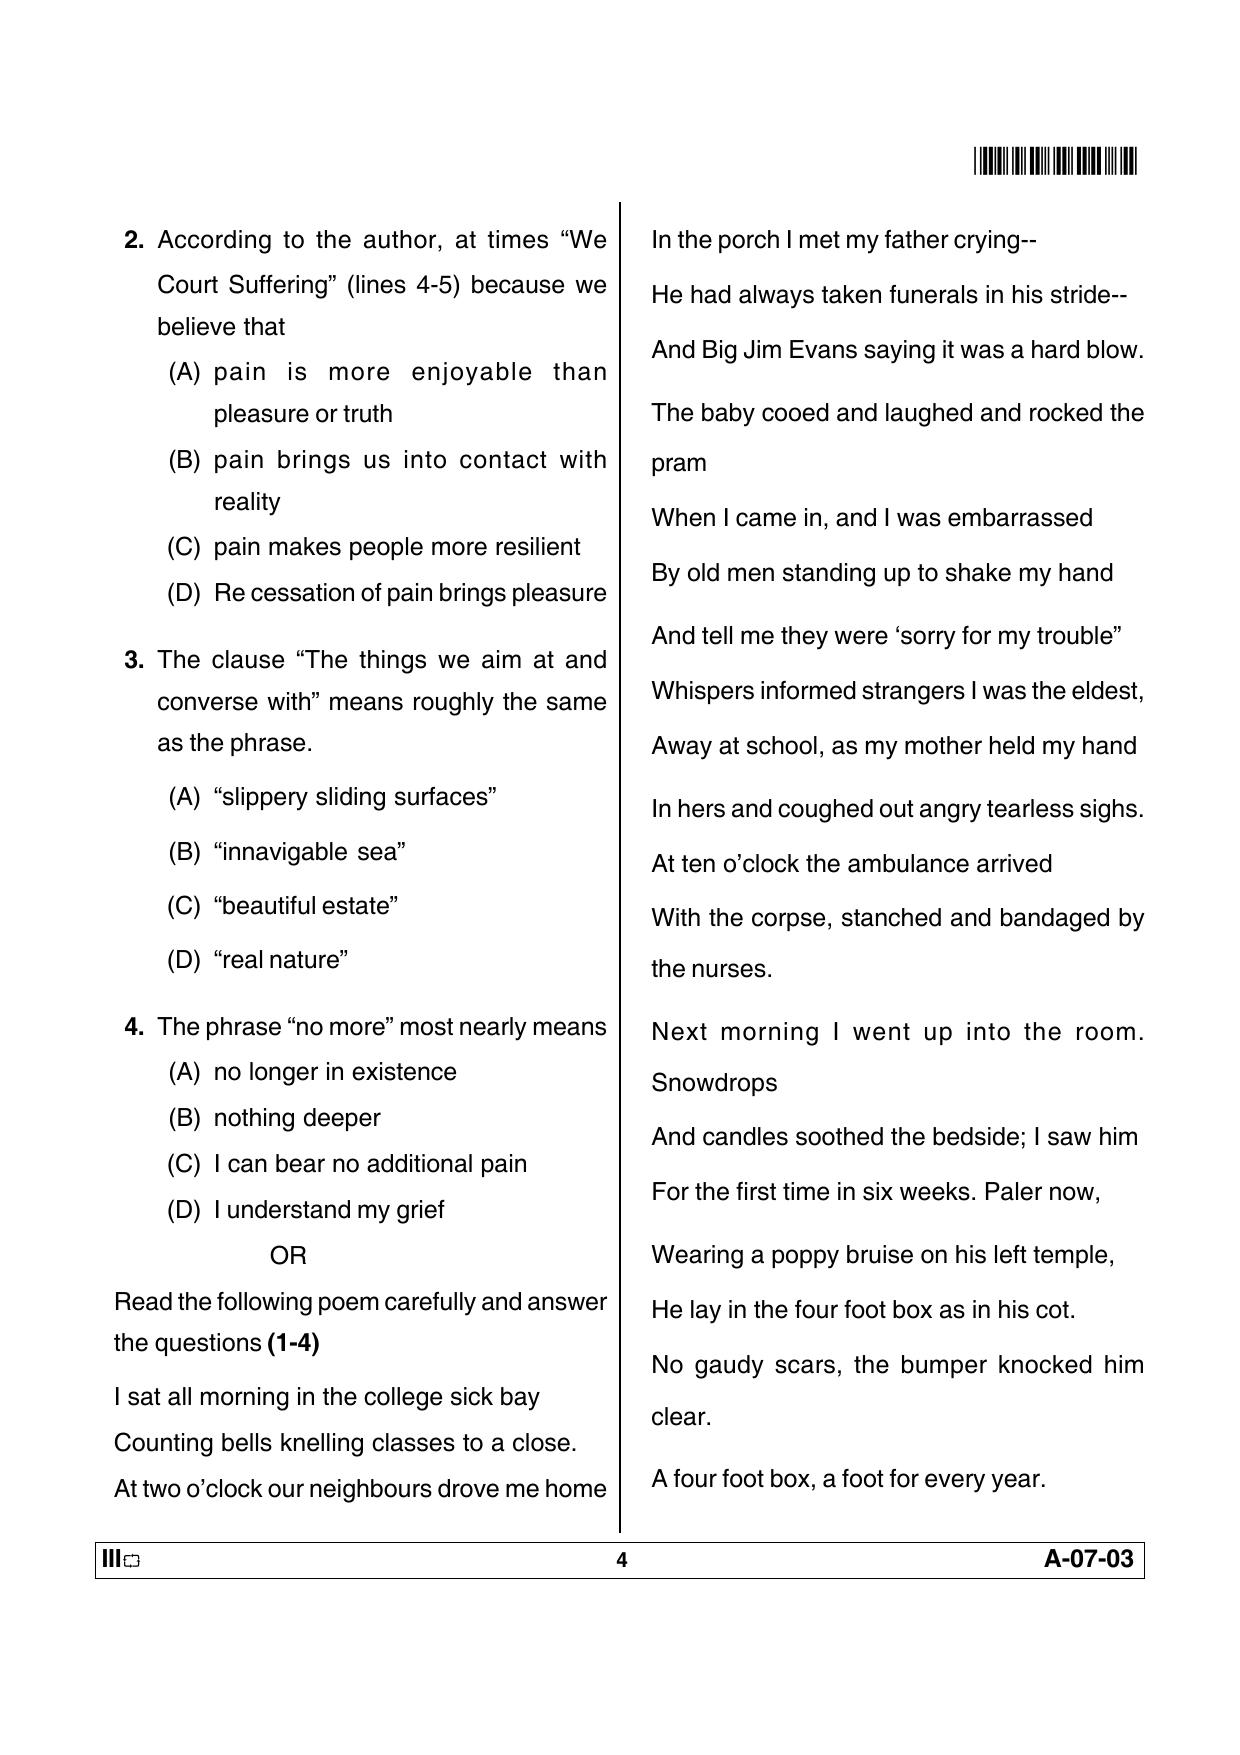 APSET English Previous Paper PDF - Page 4